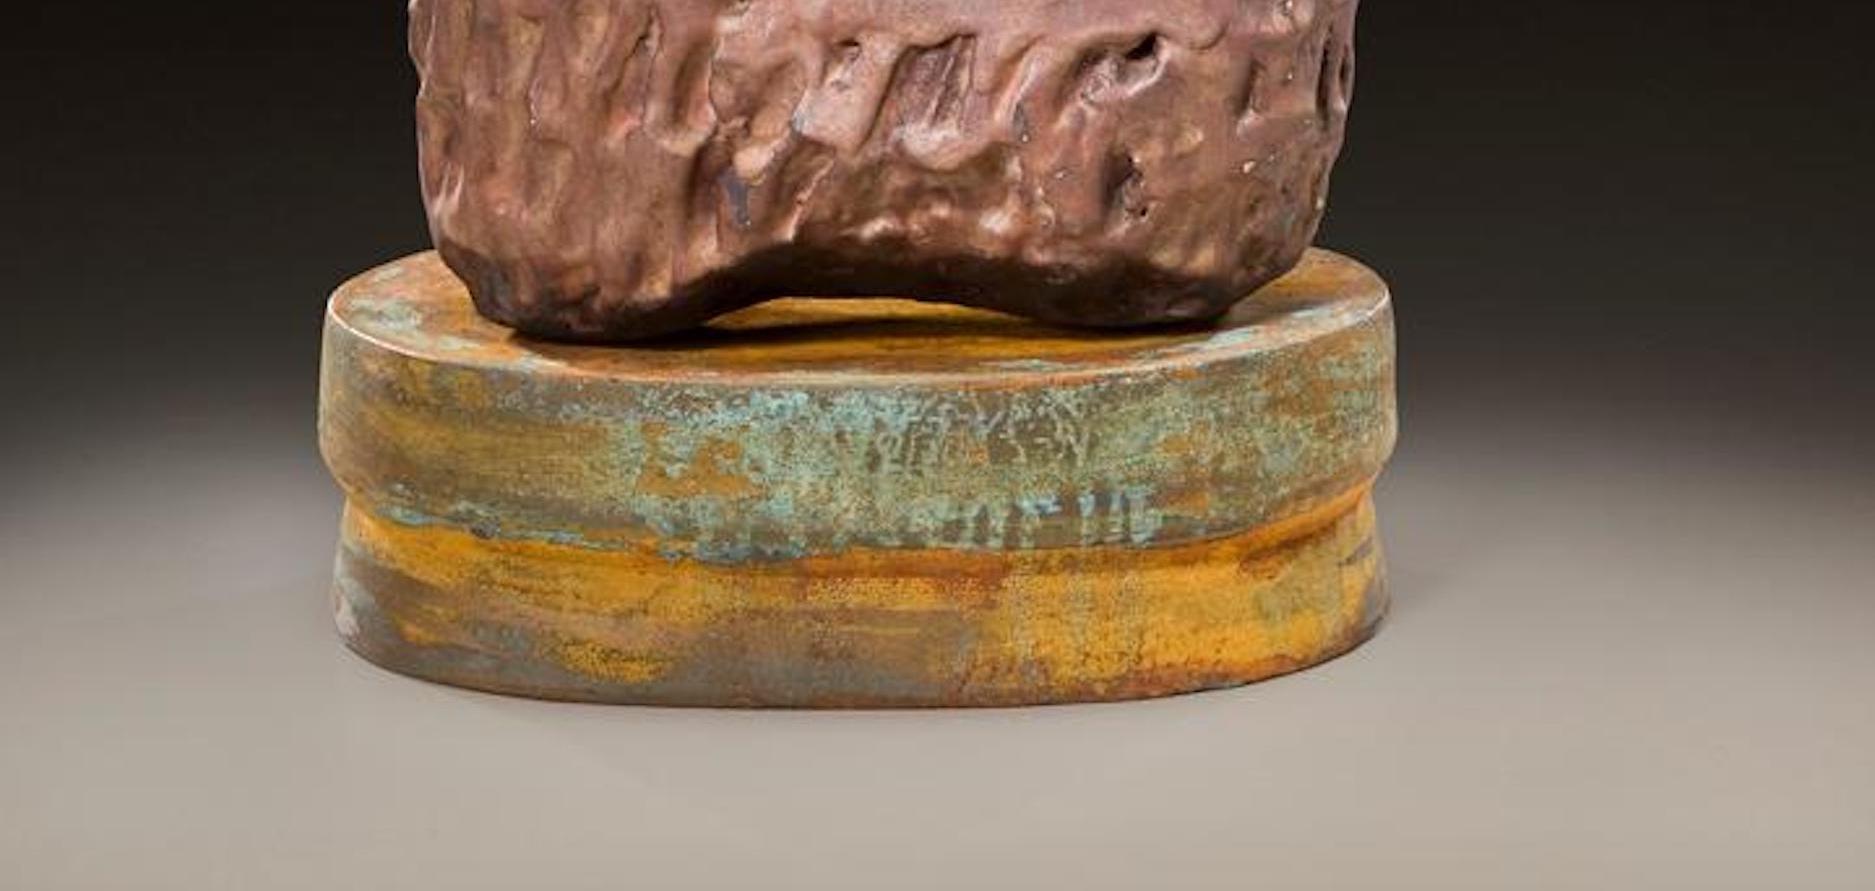 Glazed Richard Hirsch Ceramic Mortar and Pestle Sculpture #30, 2009 For Sale